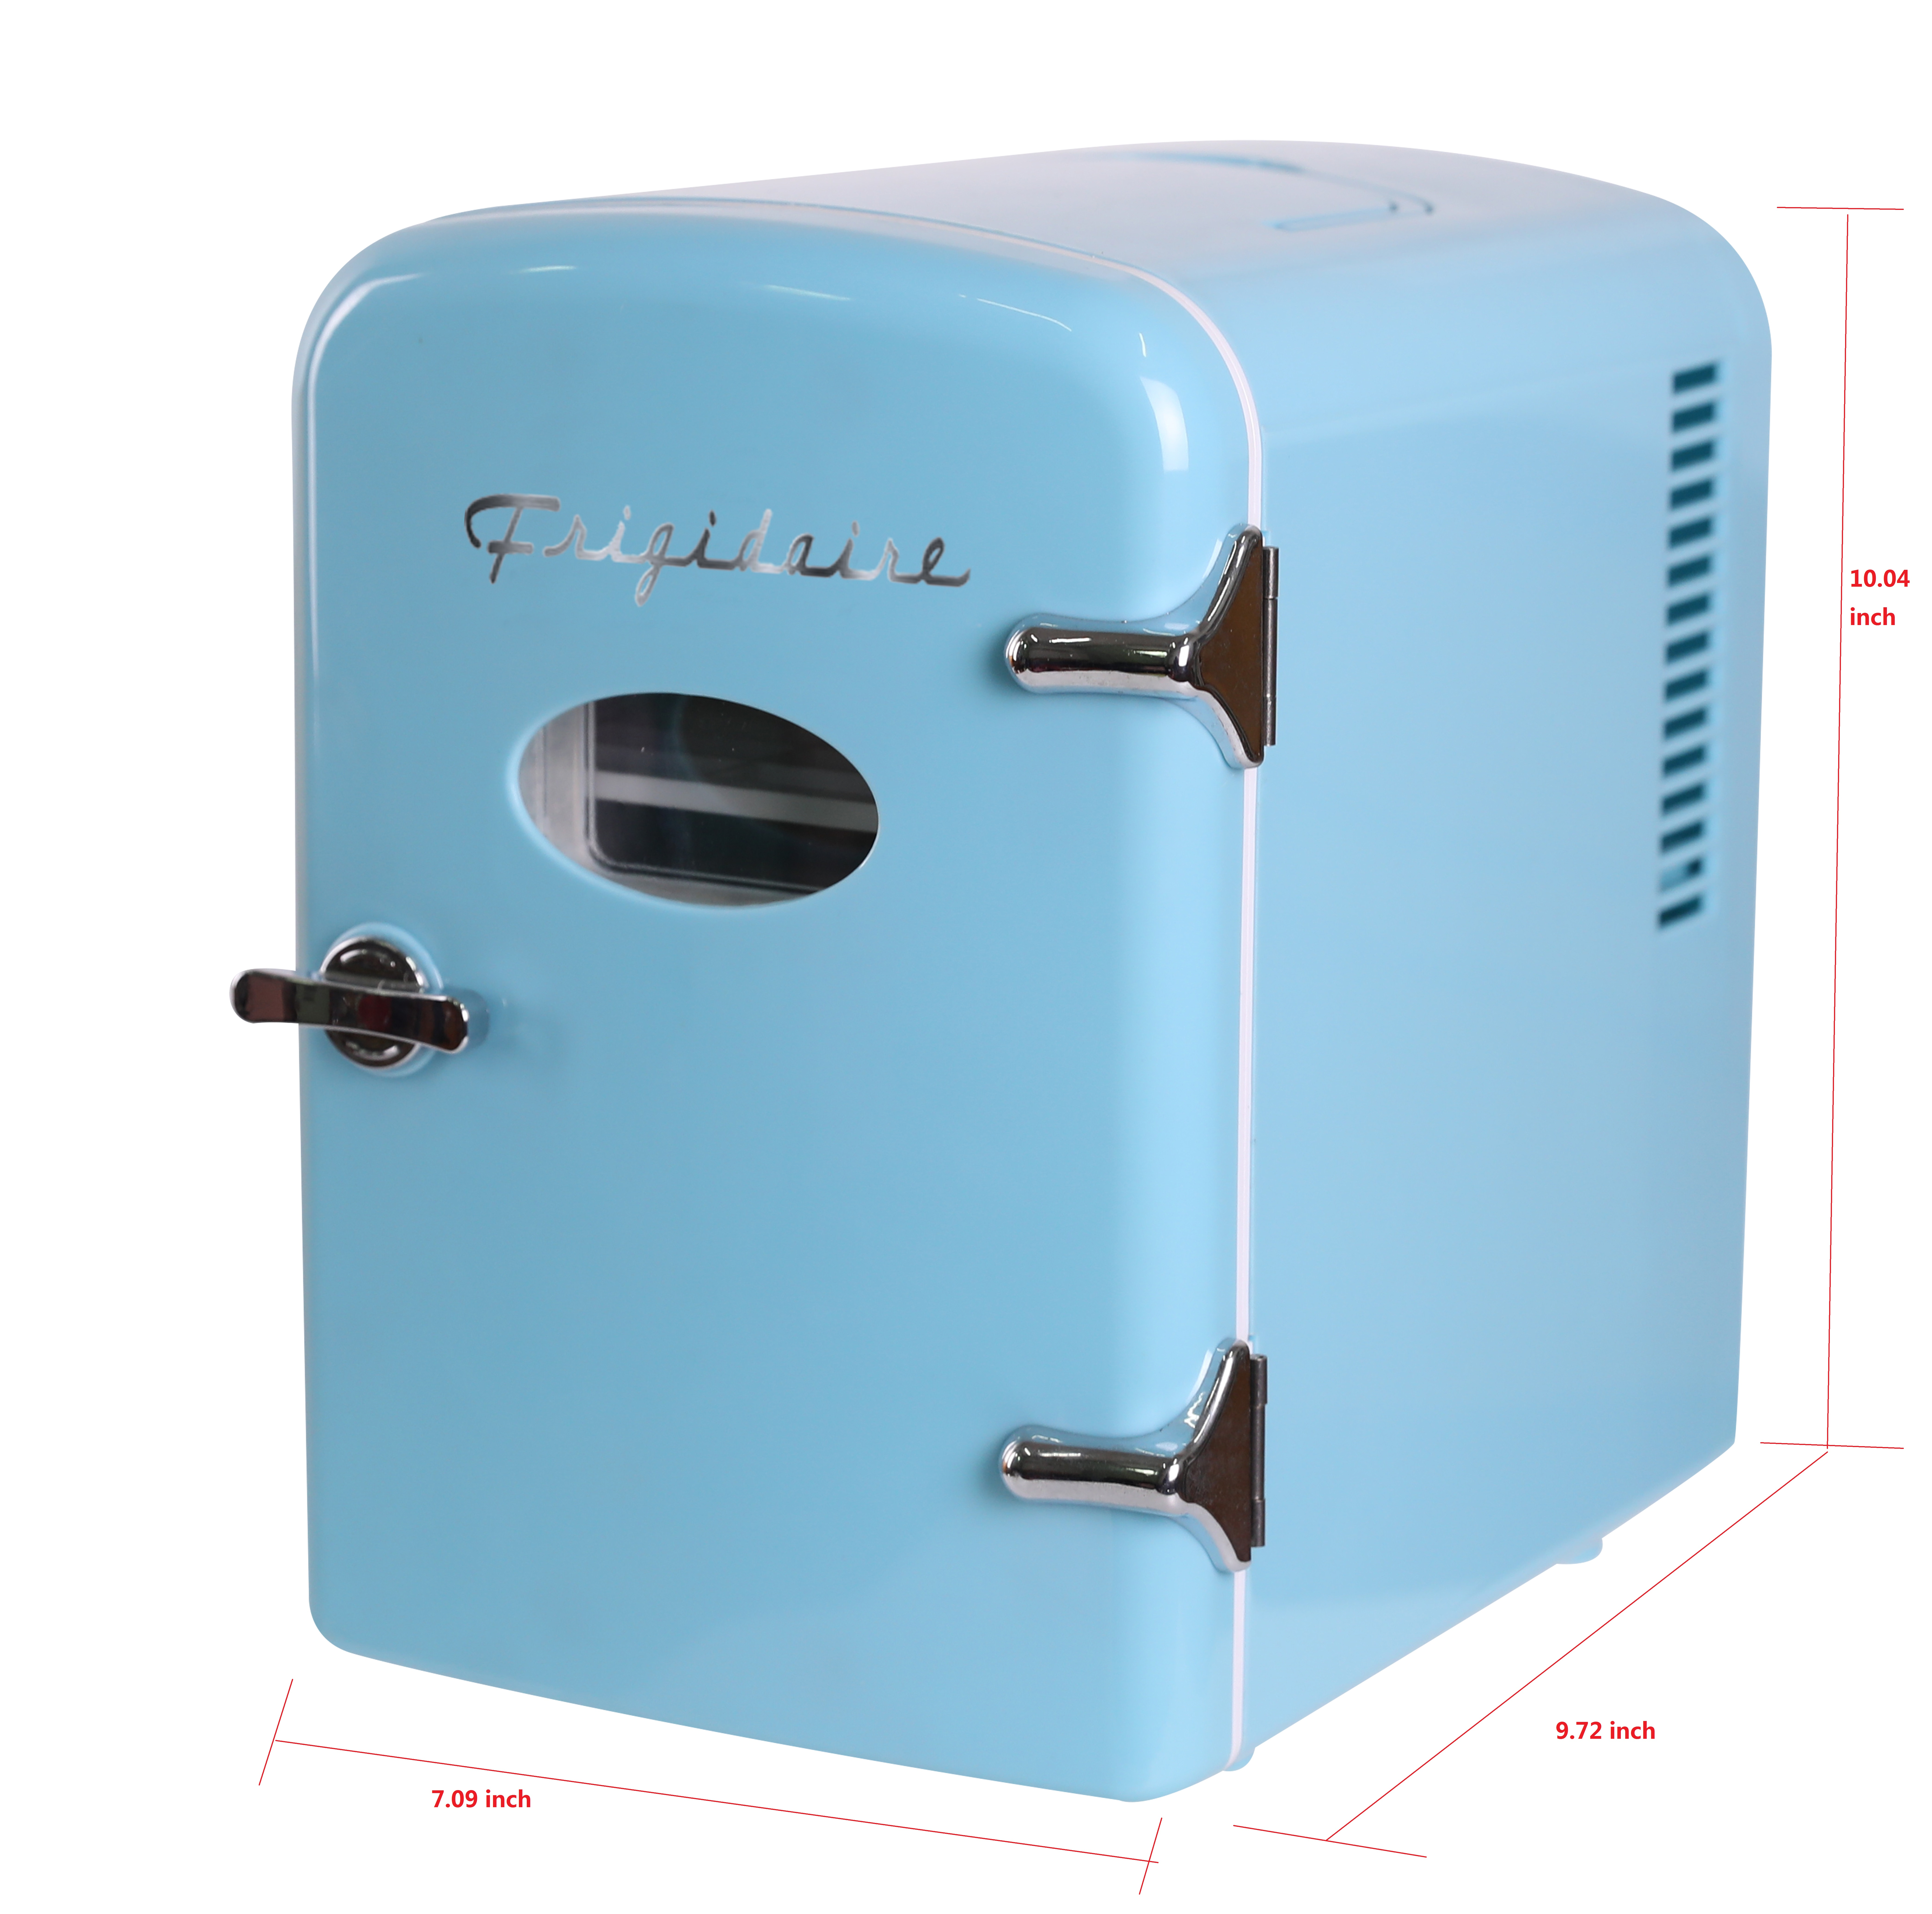 Frigidaire Portable Retro 6 Can Personal Beverage Cooler, EFMIS129, Blue - image 5 of 9